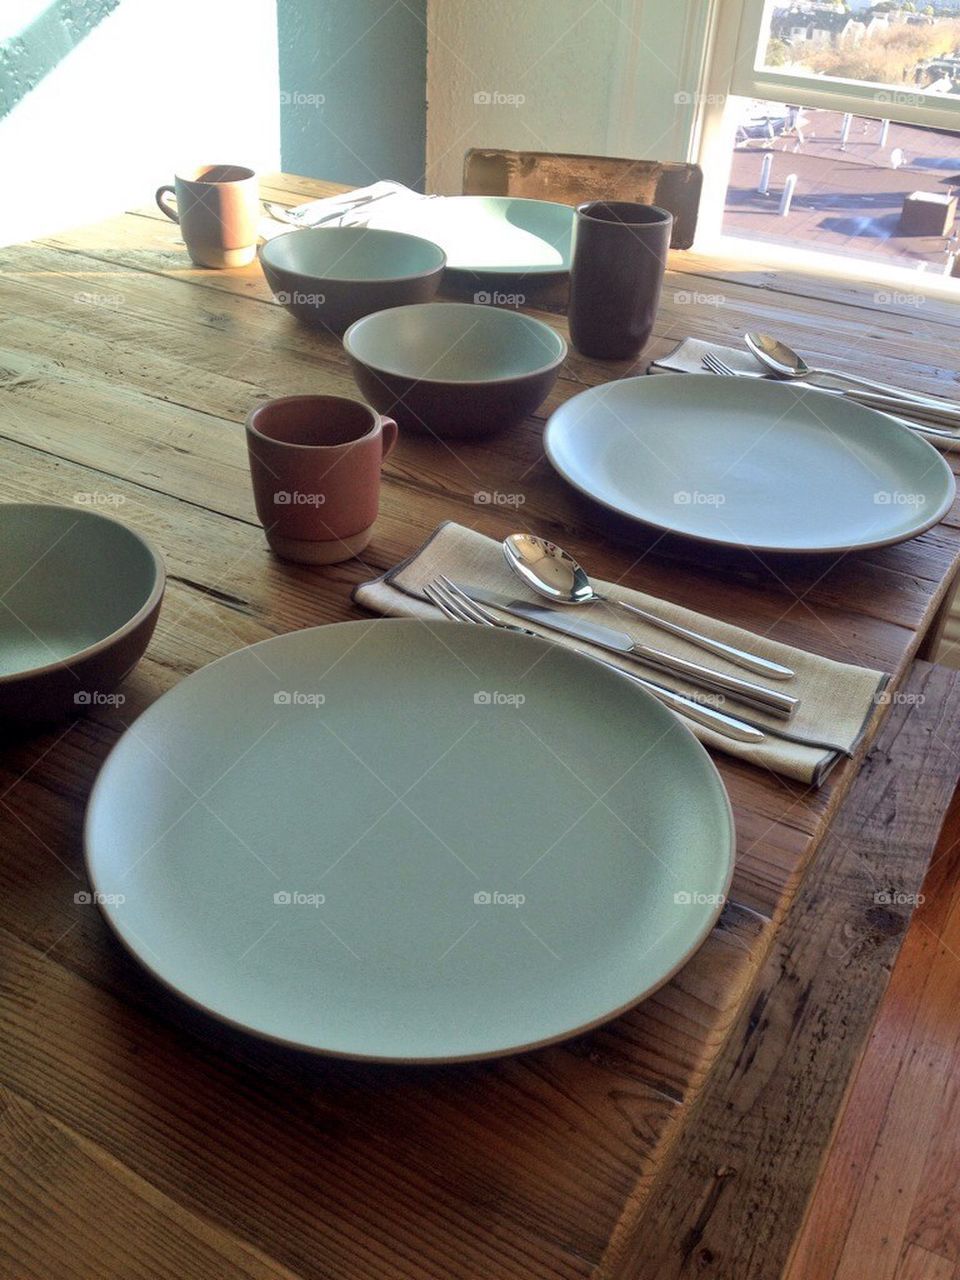 Heath ceramics table setting